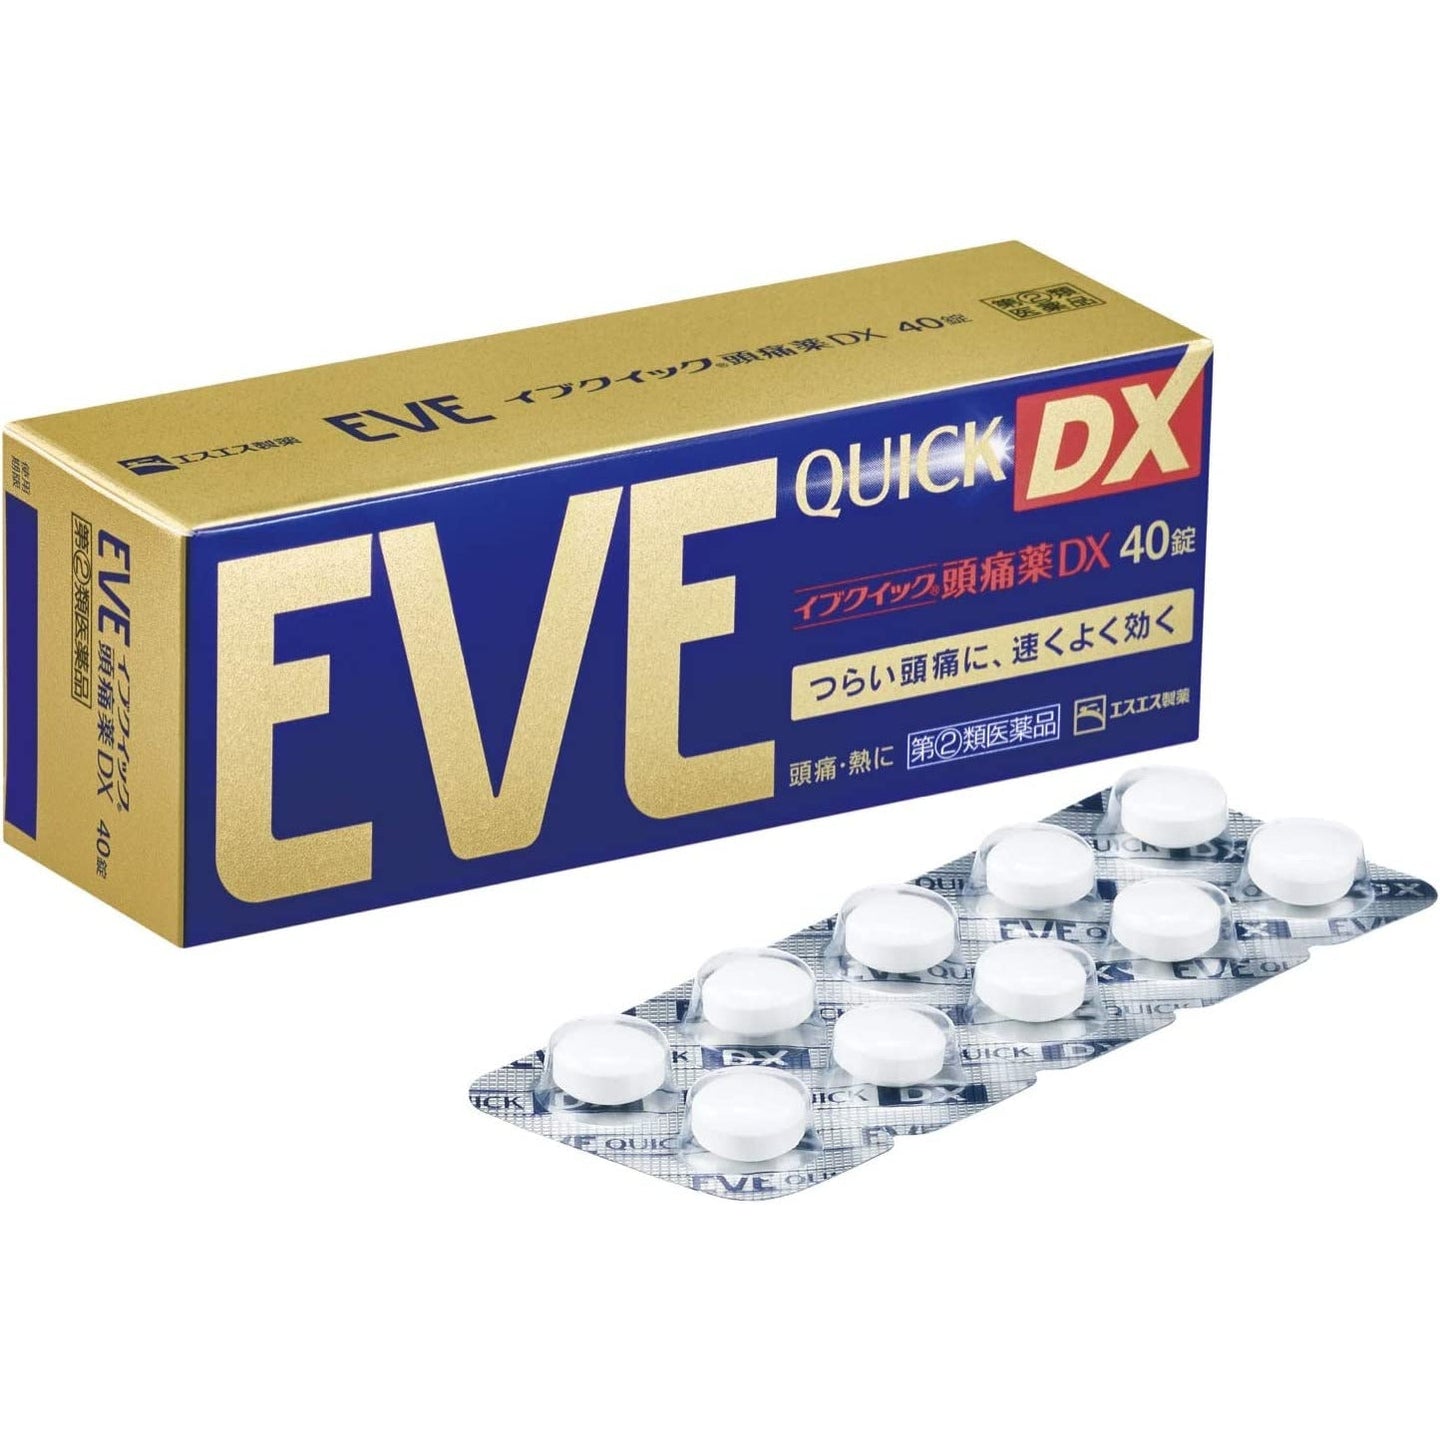 SS製藥 白兔牌 EVE QUICK DX 速效止痛藥